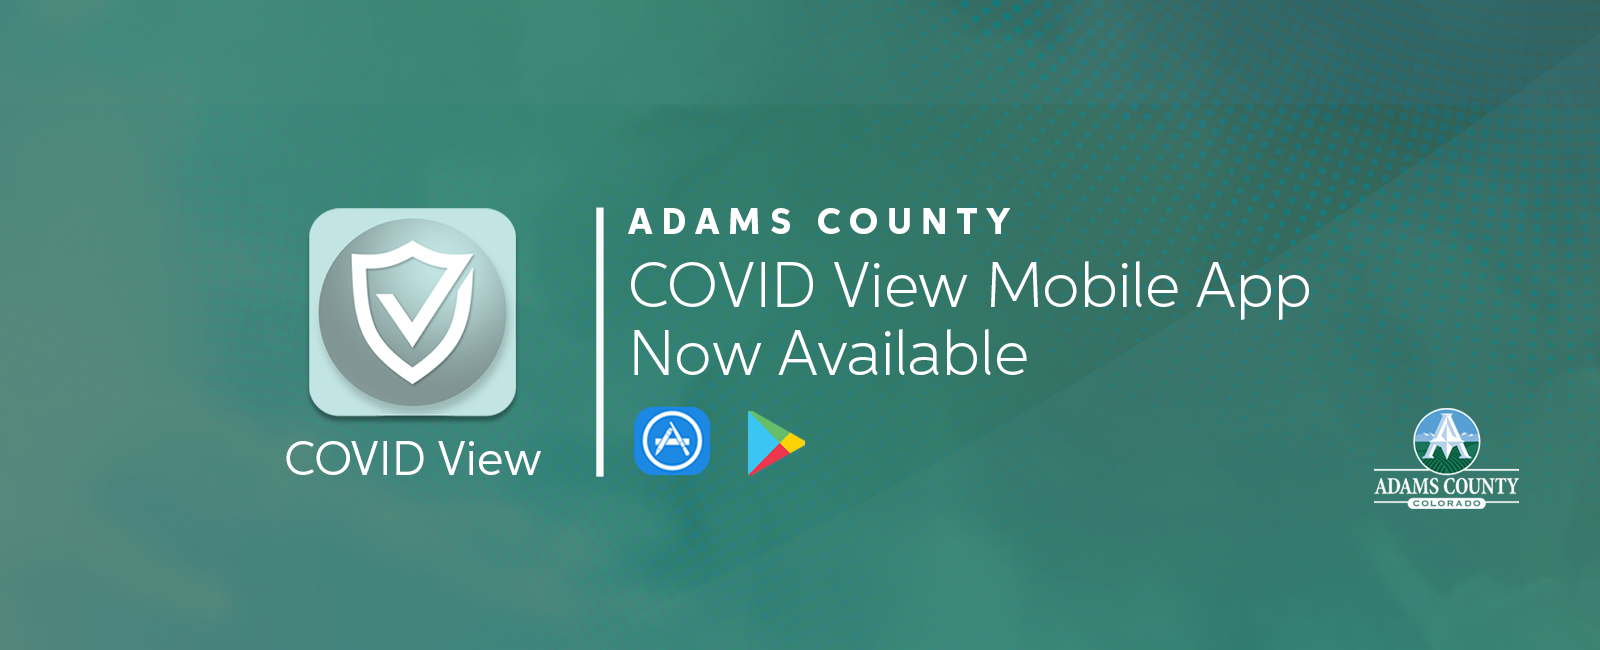 COVID View Mobile App